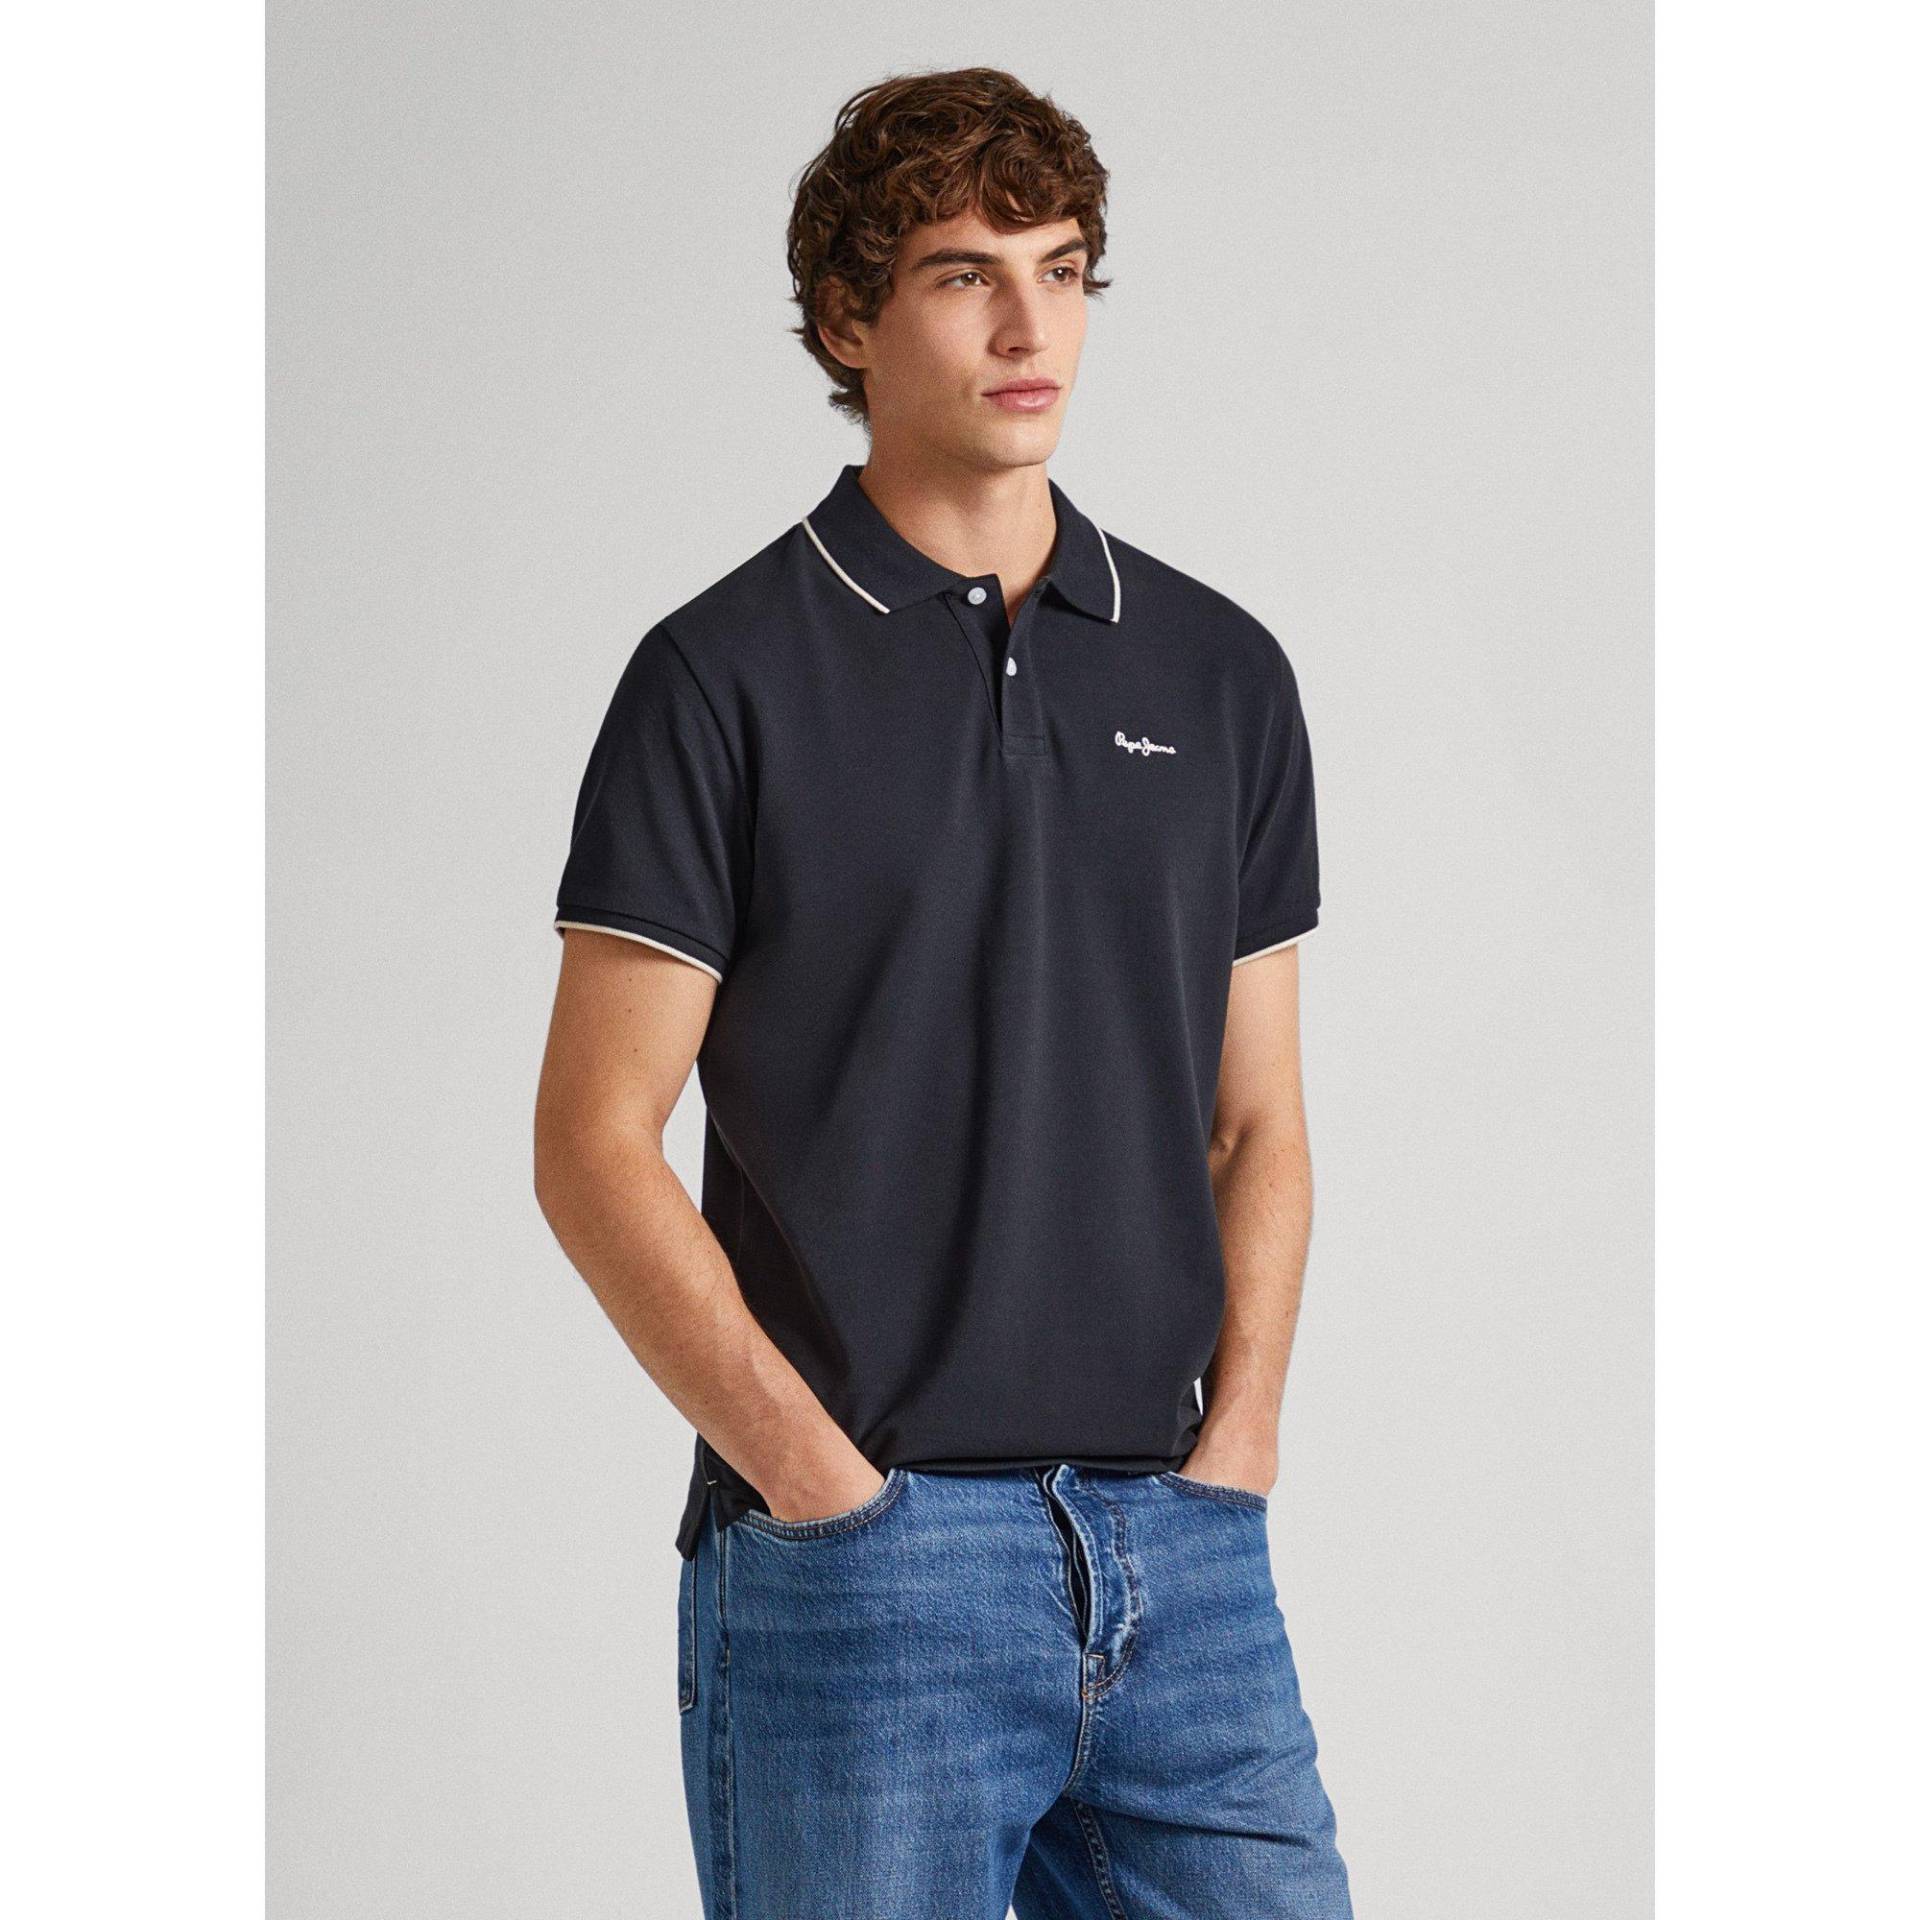 Poloshirt, Kurzarm Herren Black XL von Pepe Jeans